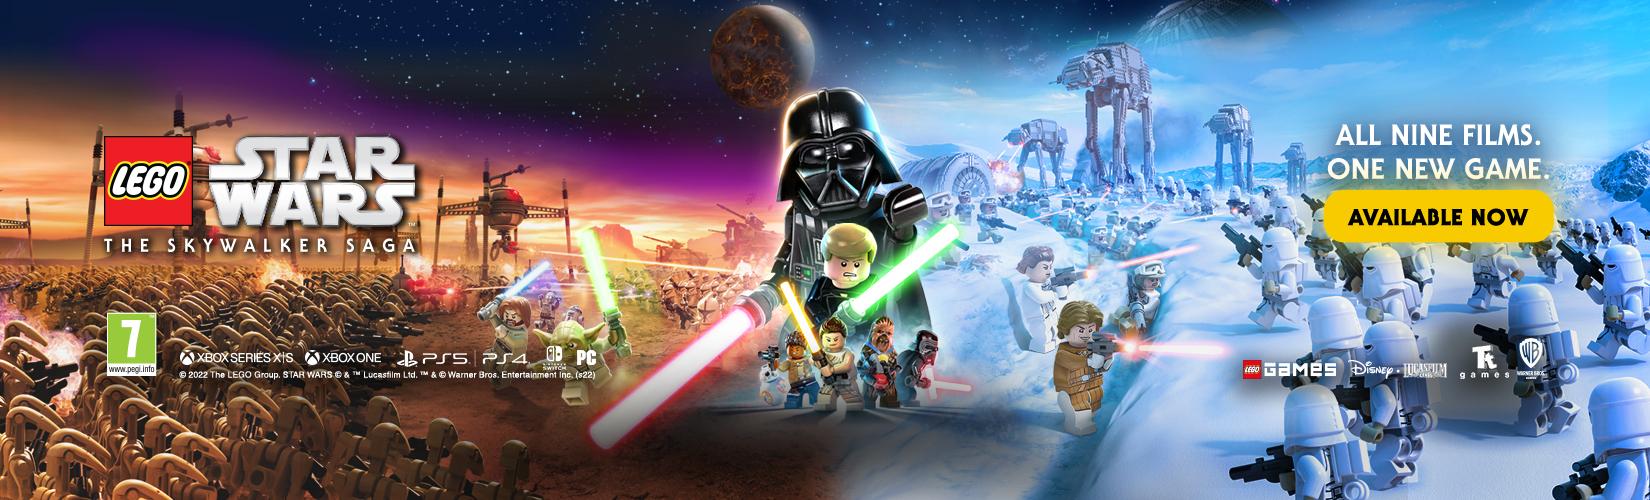 Lego Star Wars. The Skywalker Saga. All nine films one new game.